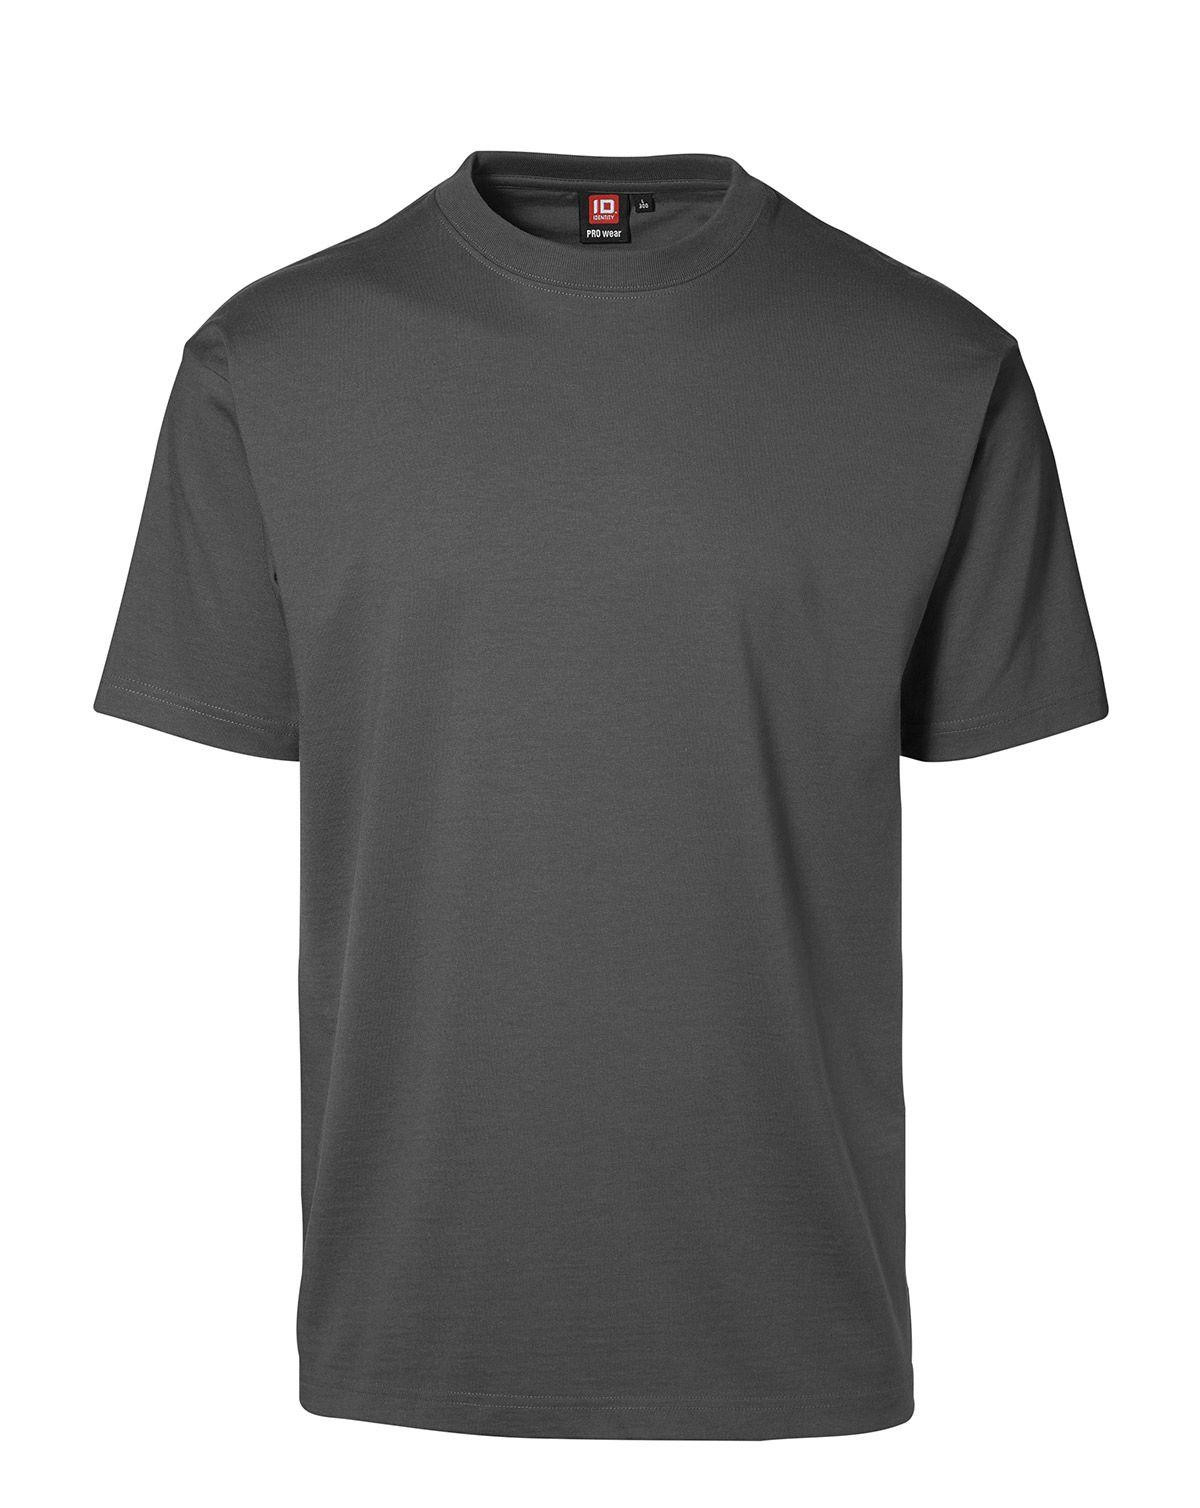 ID PRO Wear T-shirt til Herre (Sølv Grå, 4XL)